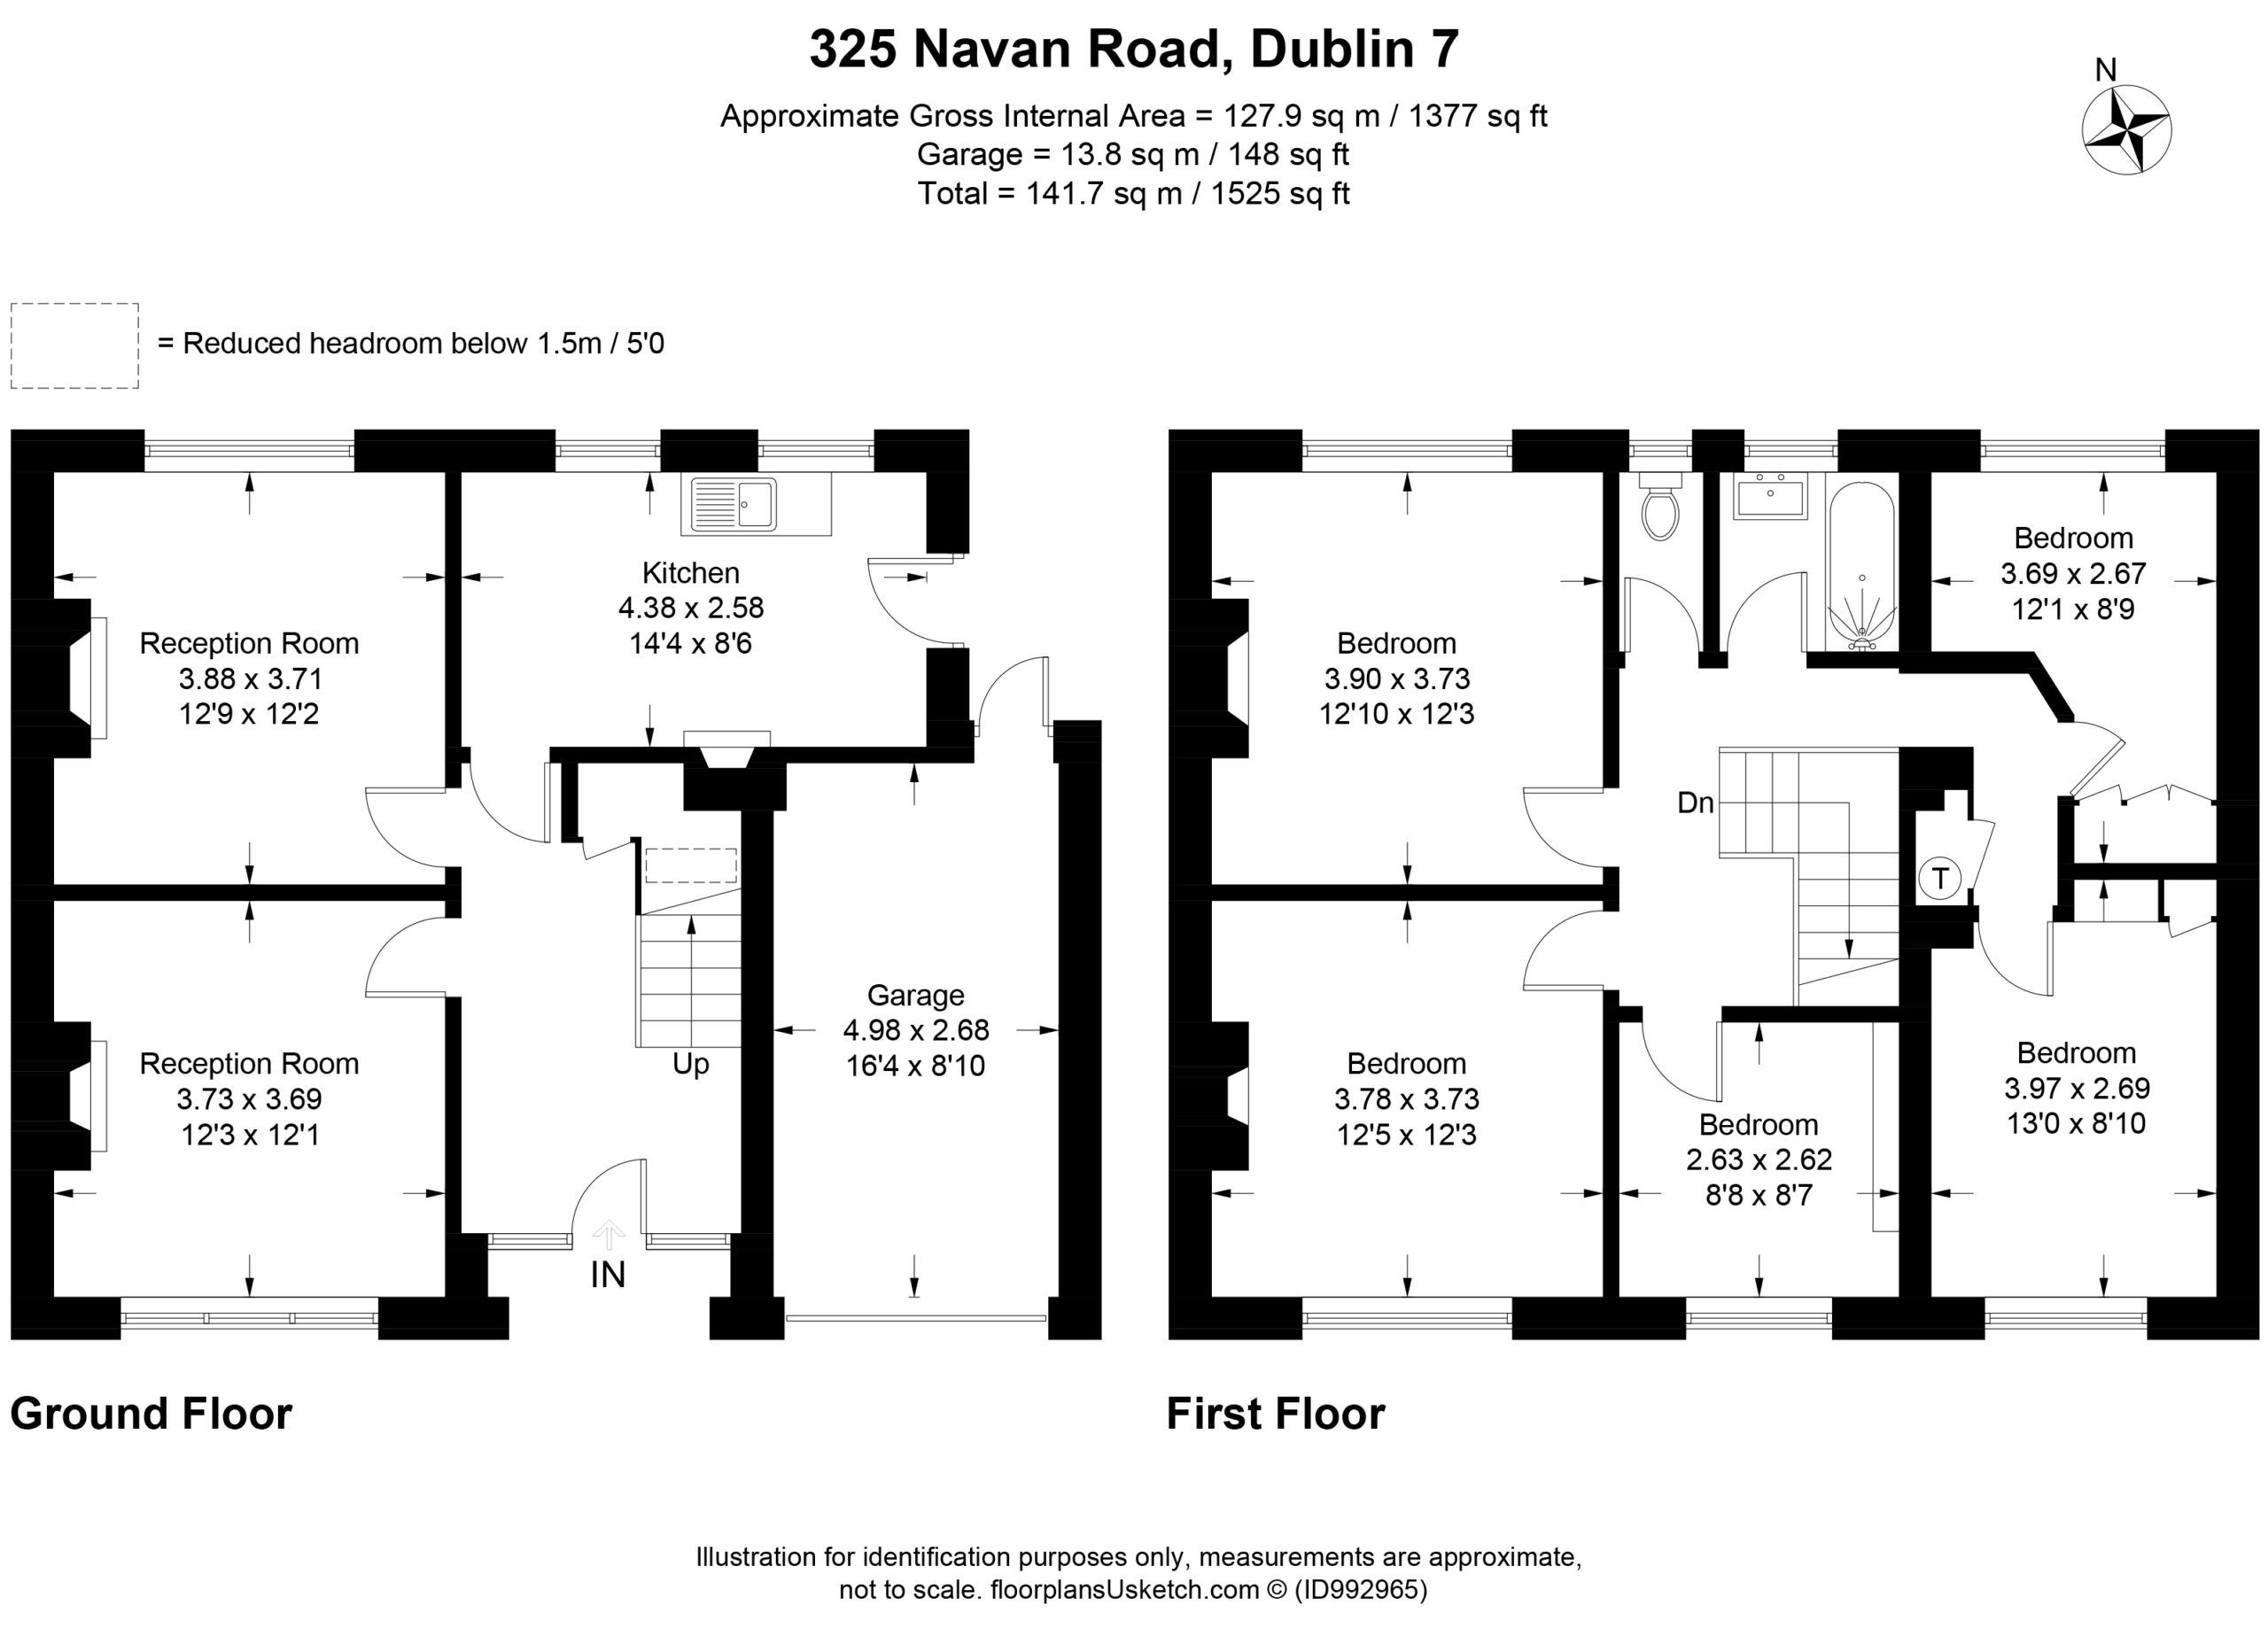 325 Navan Road, Dublin 7